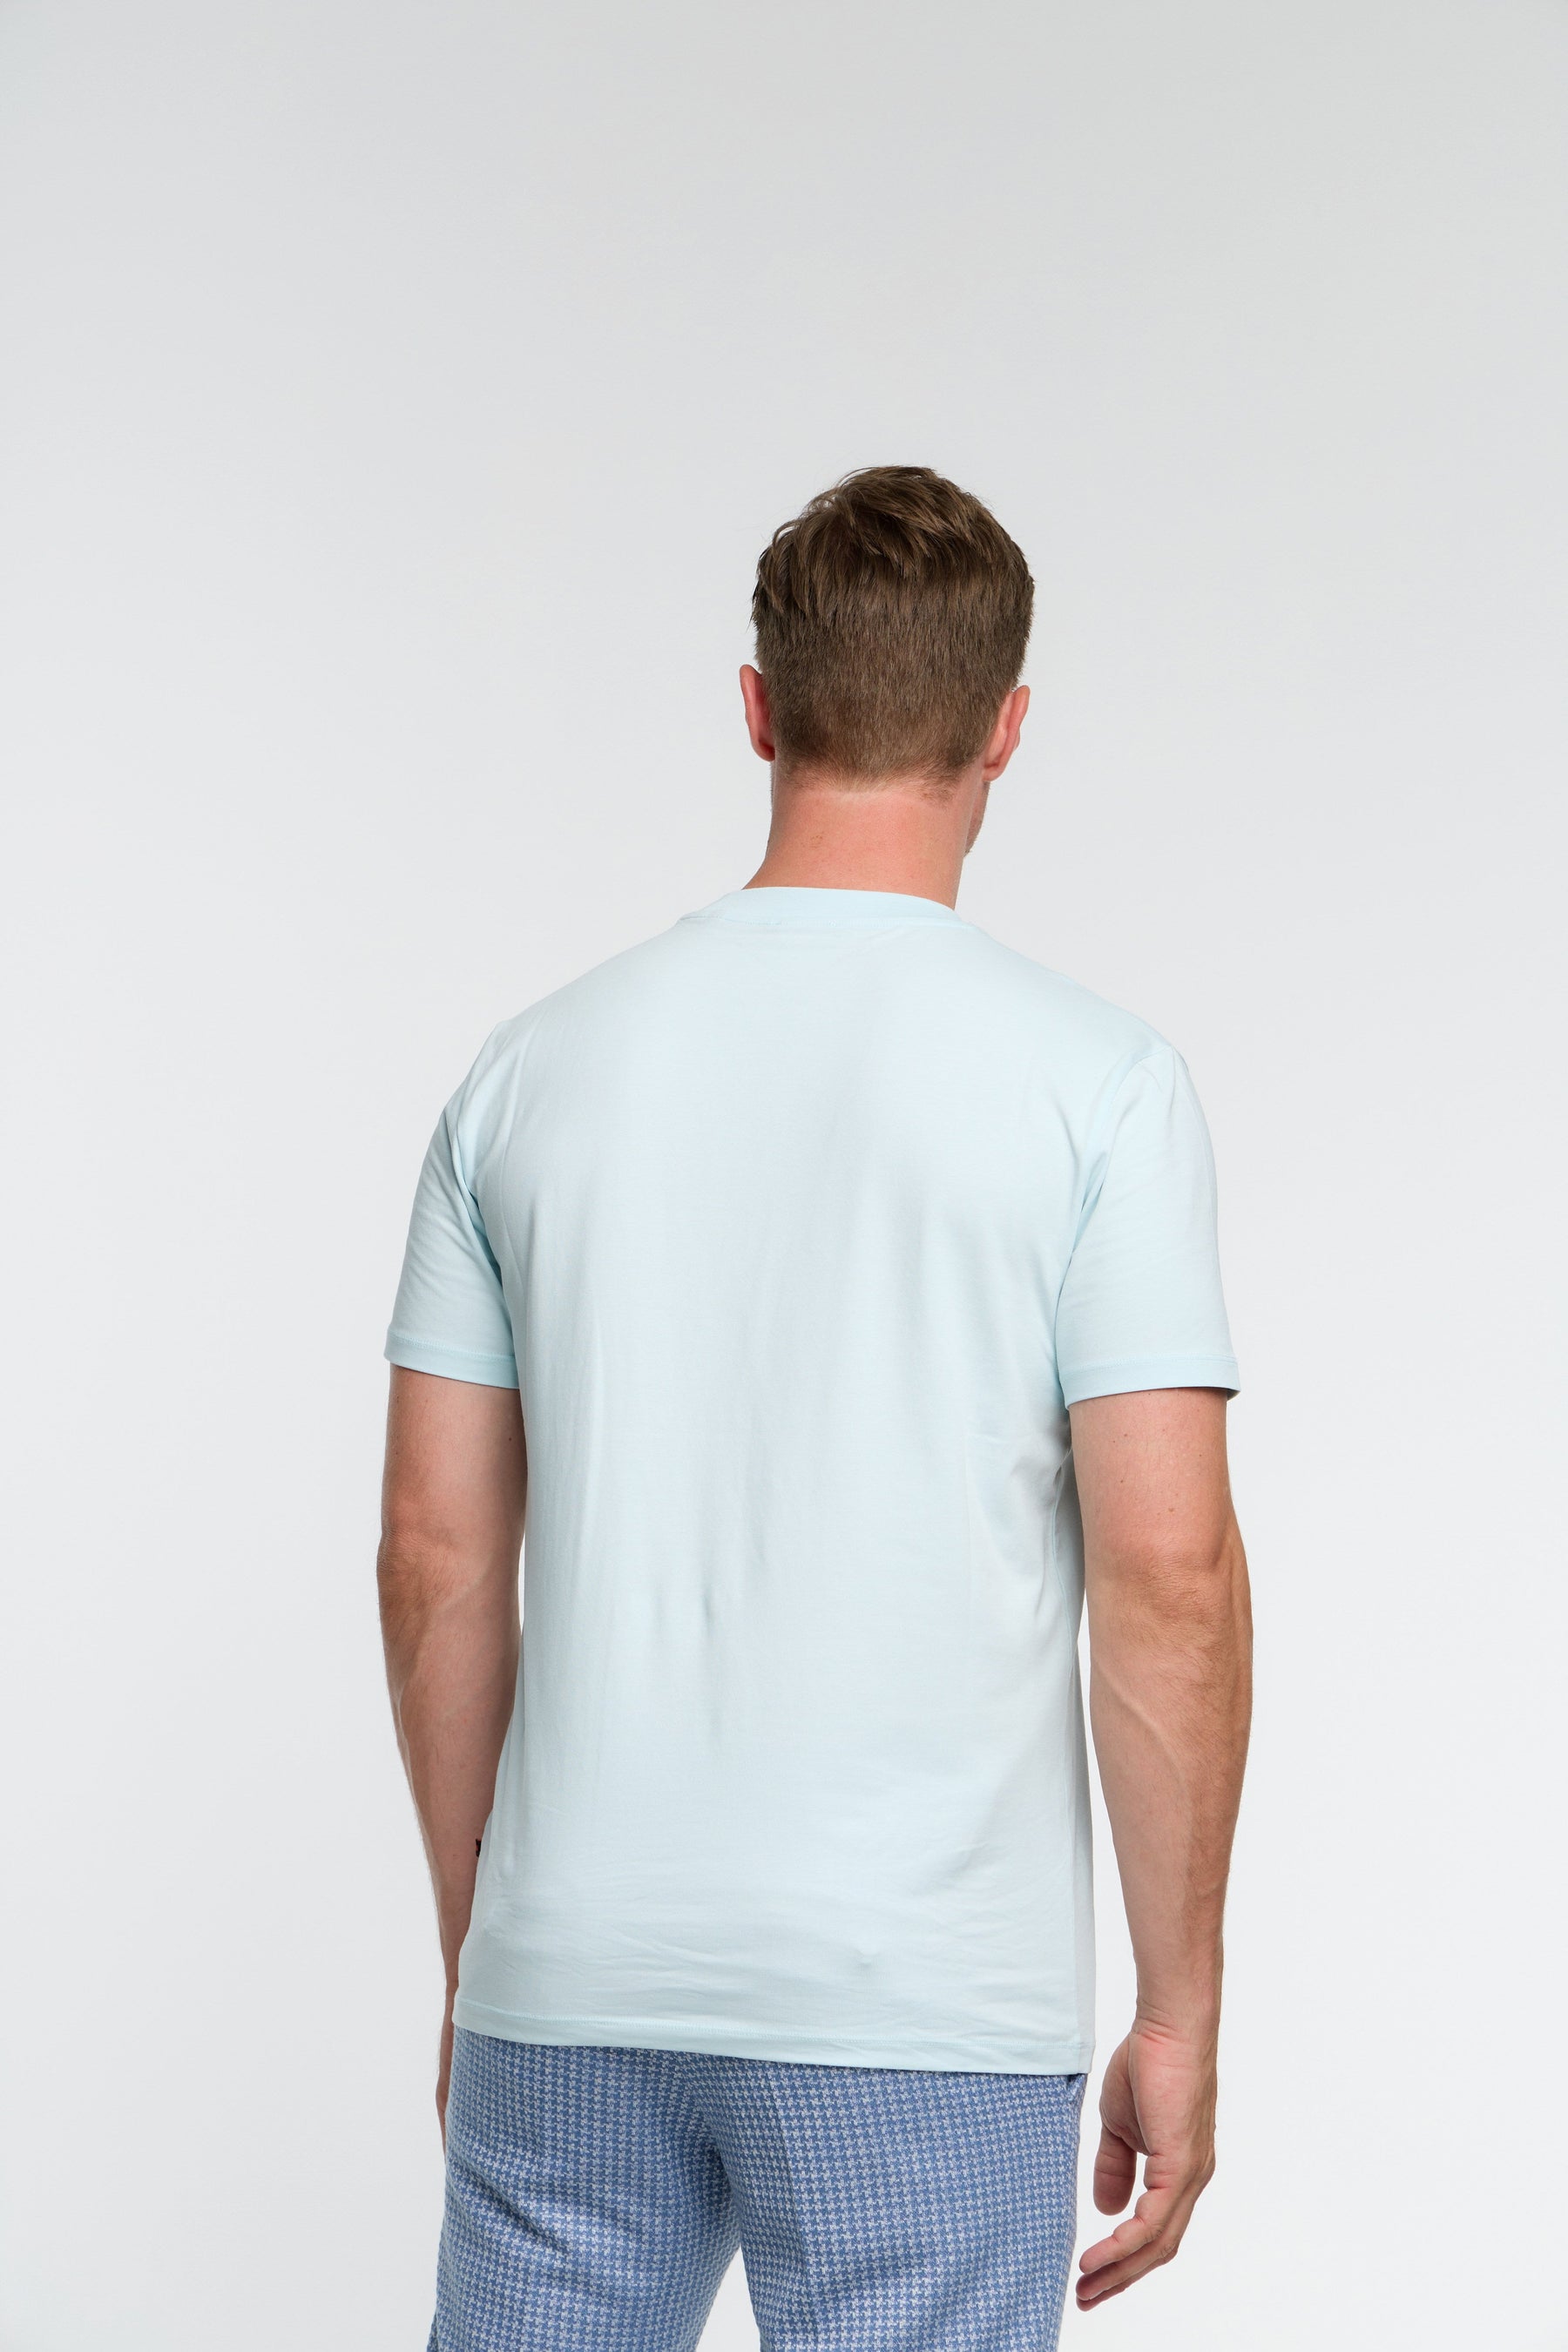 T-Shirt DiFlo 201-720 Mint